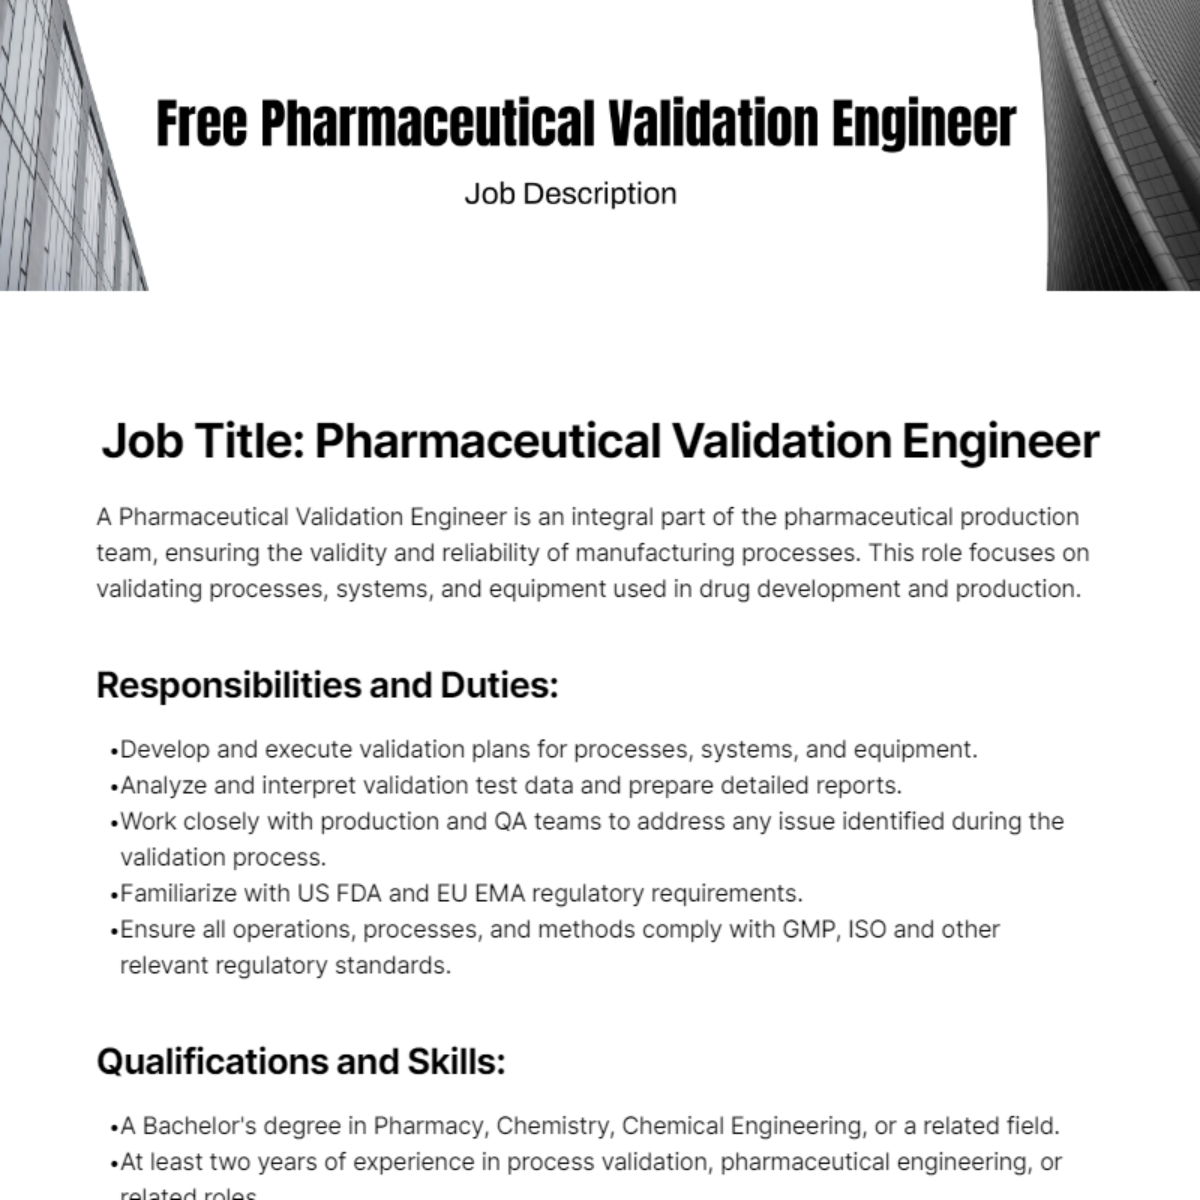 Free Pharmaceutical Validation Engineer Job Description Template